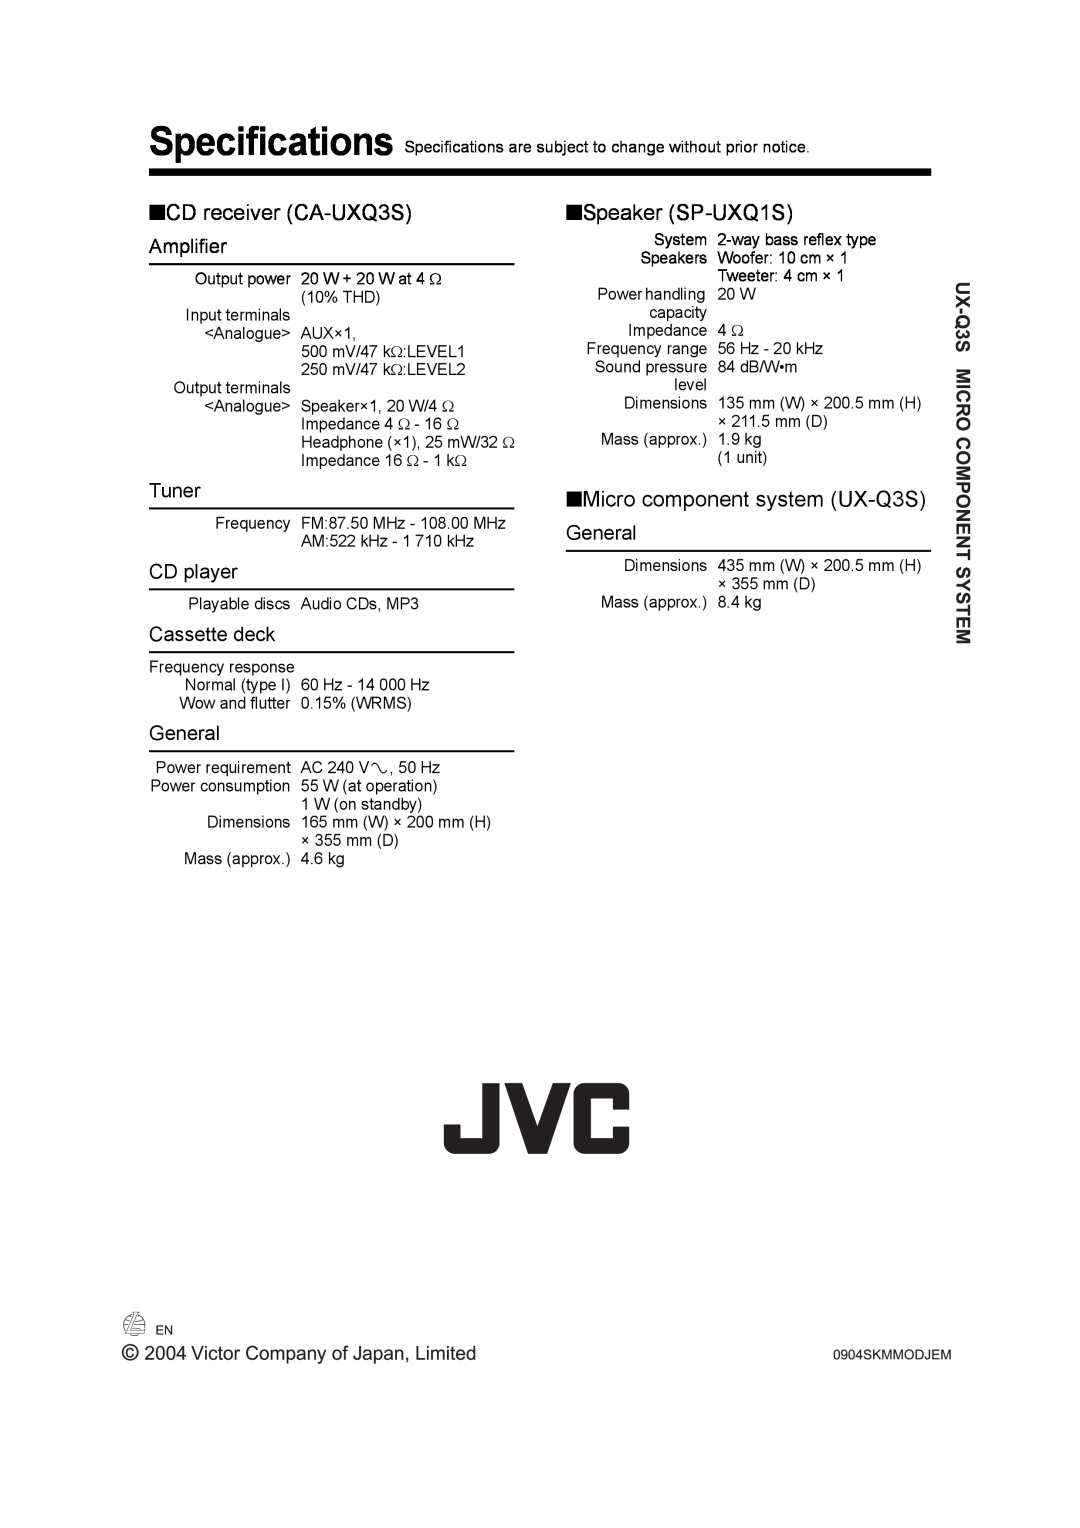 JVC LVT1218-005A manual CD receiver CA-UXQ3S, Speaker SP-UXQ1S, Micro component system UX-Q3S 